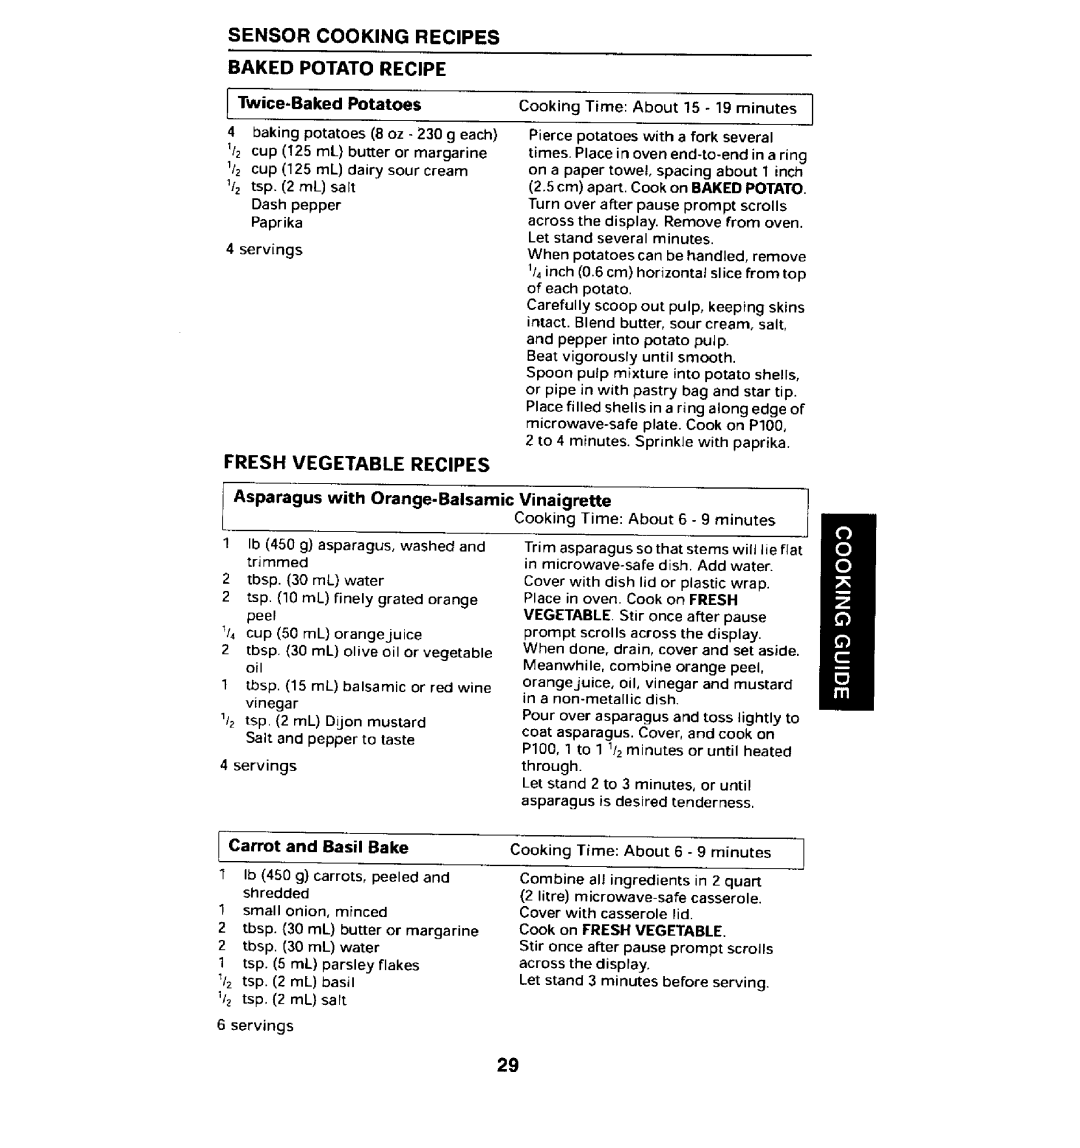 Maytag MMV5100AA manual I Carroat.dBasilBake, CookingTime About6-9mn tesI, Sensor Cooking Recipes Baked Potato Recipe 